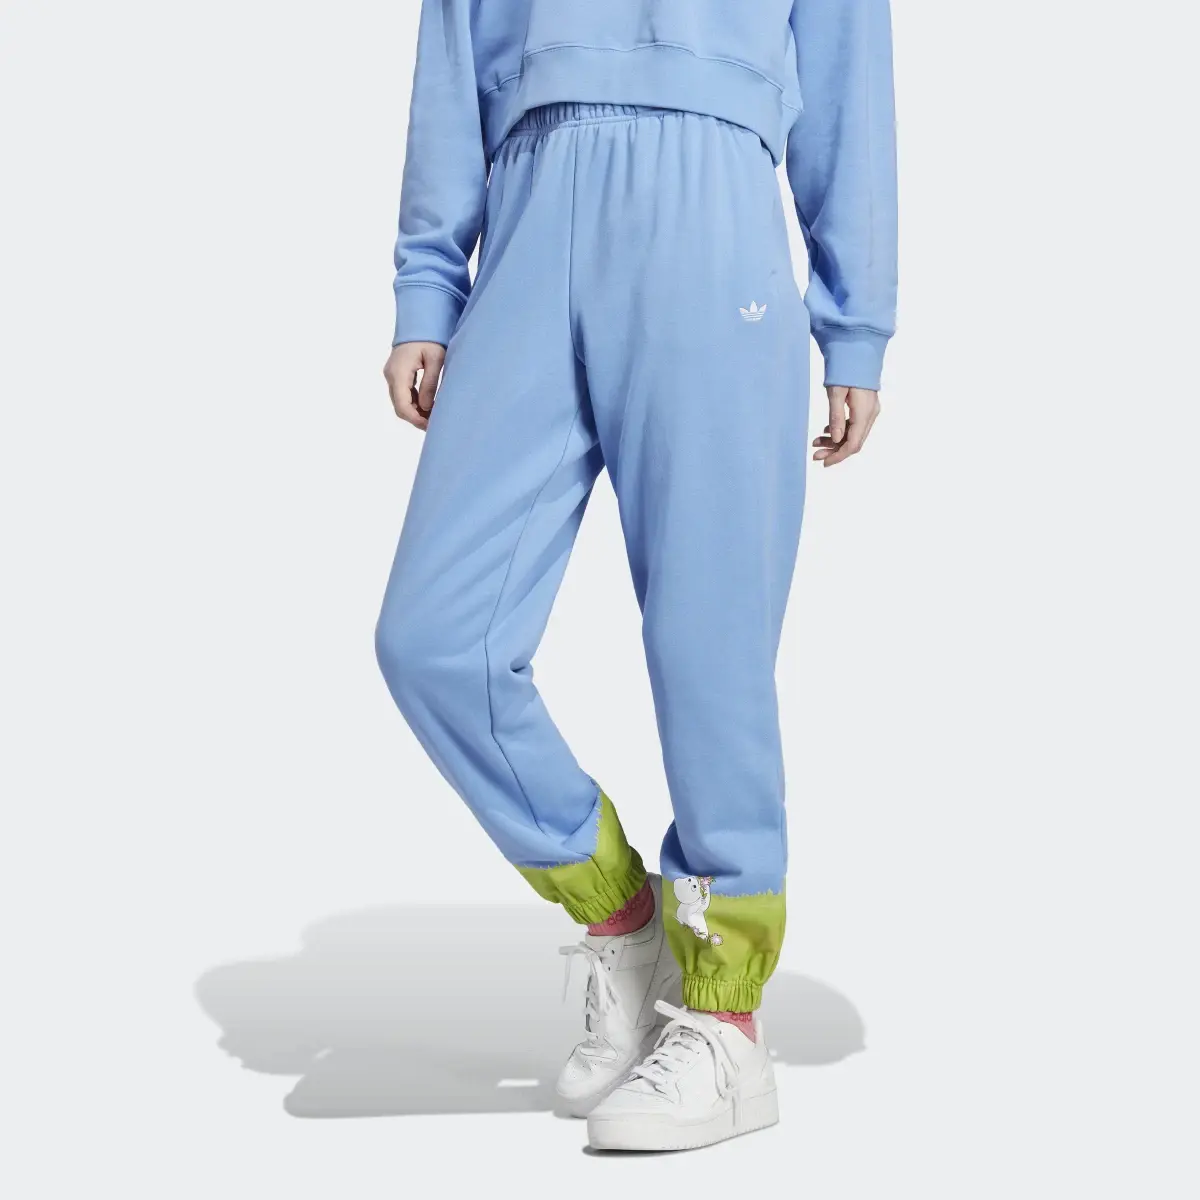 Adidas Originals x Moomin Graphic Sweat Pants. 1